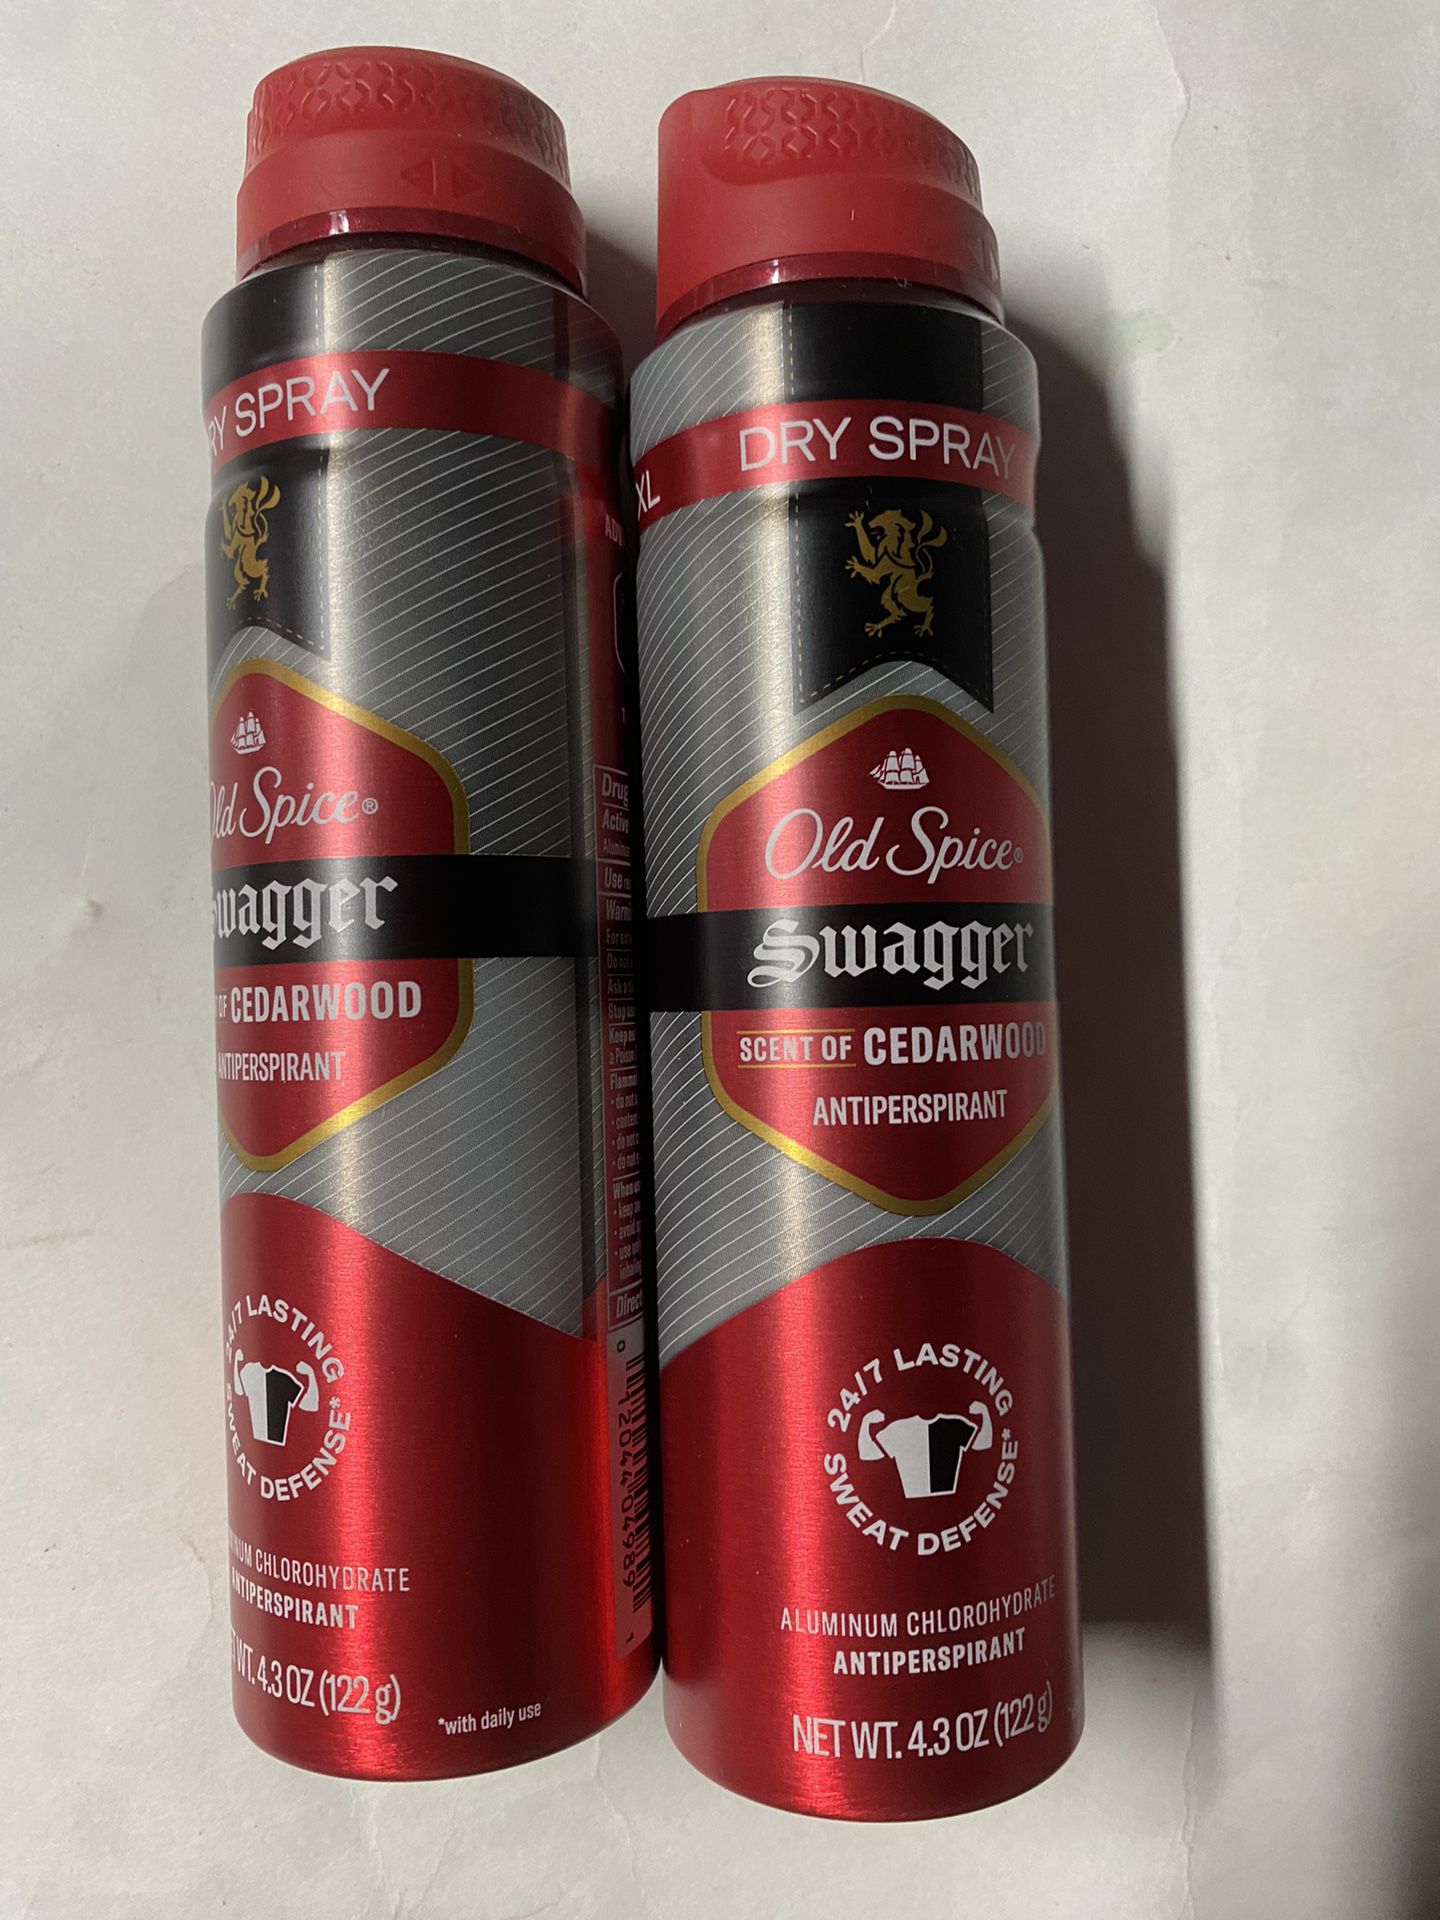 Old Spice Dry Spray Antiperspirant Set